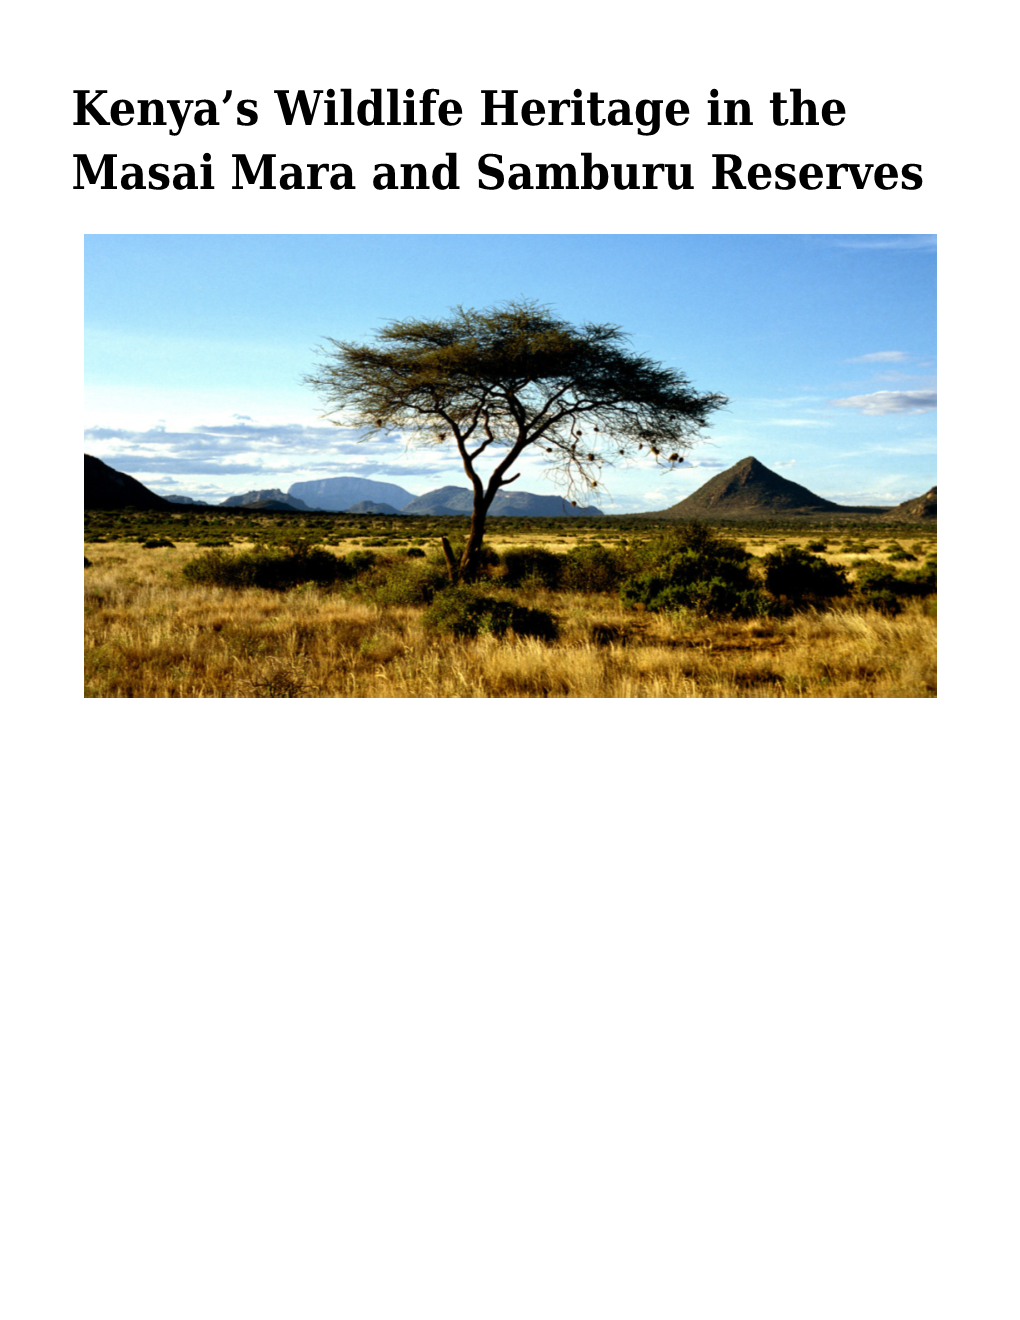 S Wildlife Heritage in the Masai Mara and Samburu Reserves Kenya Slide Show – Images by Lee Foster